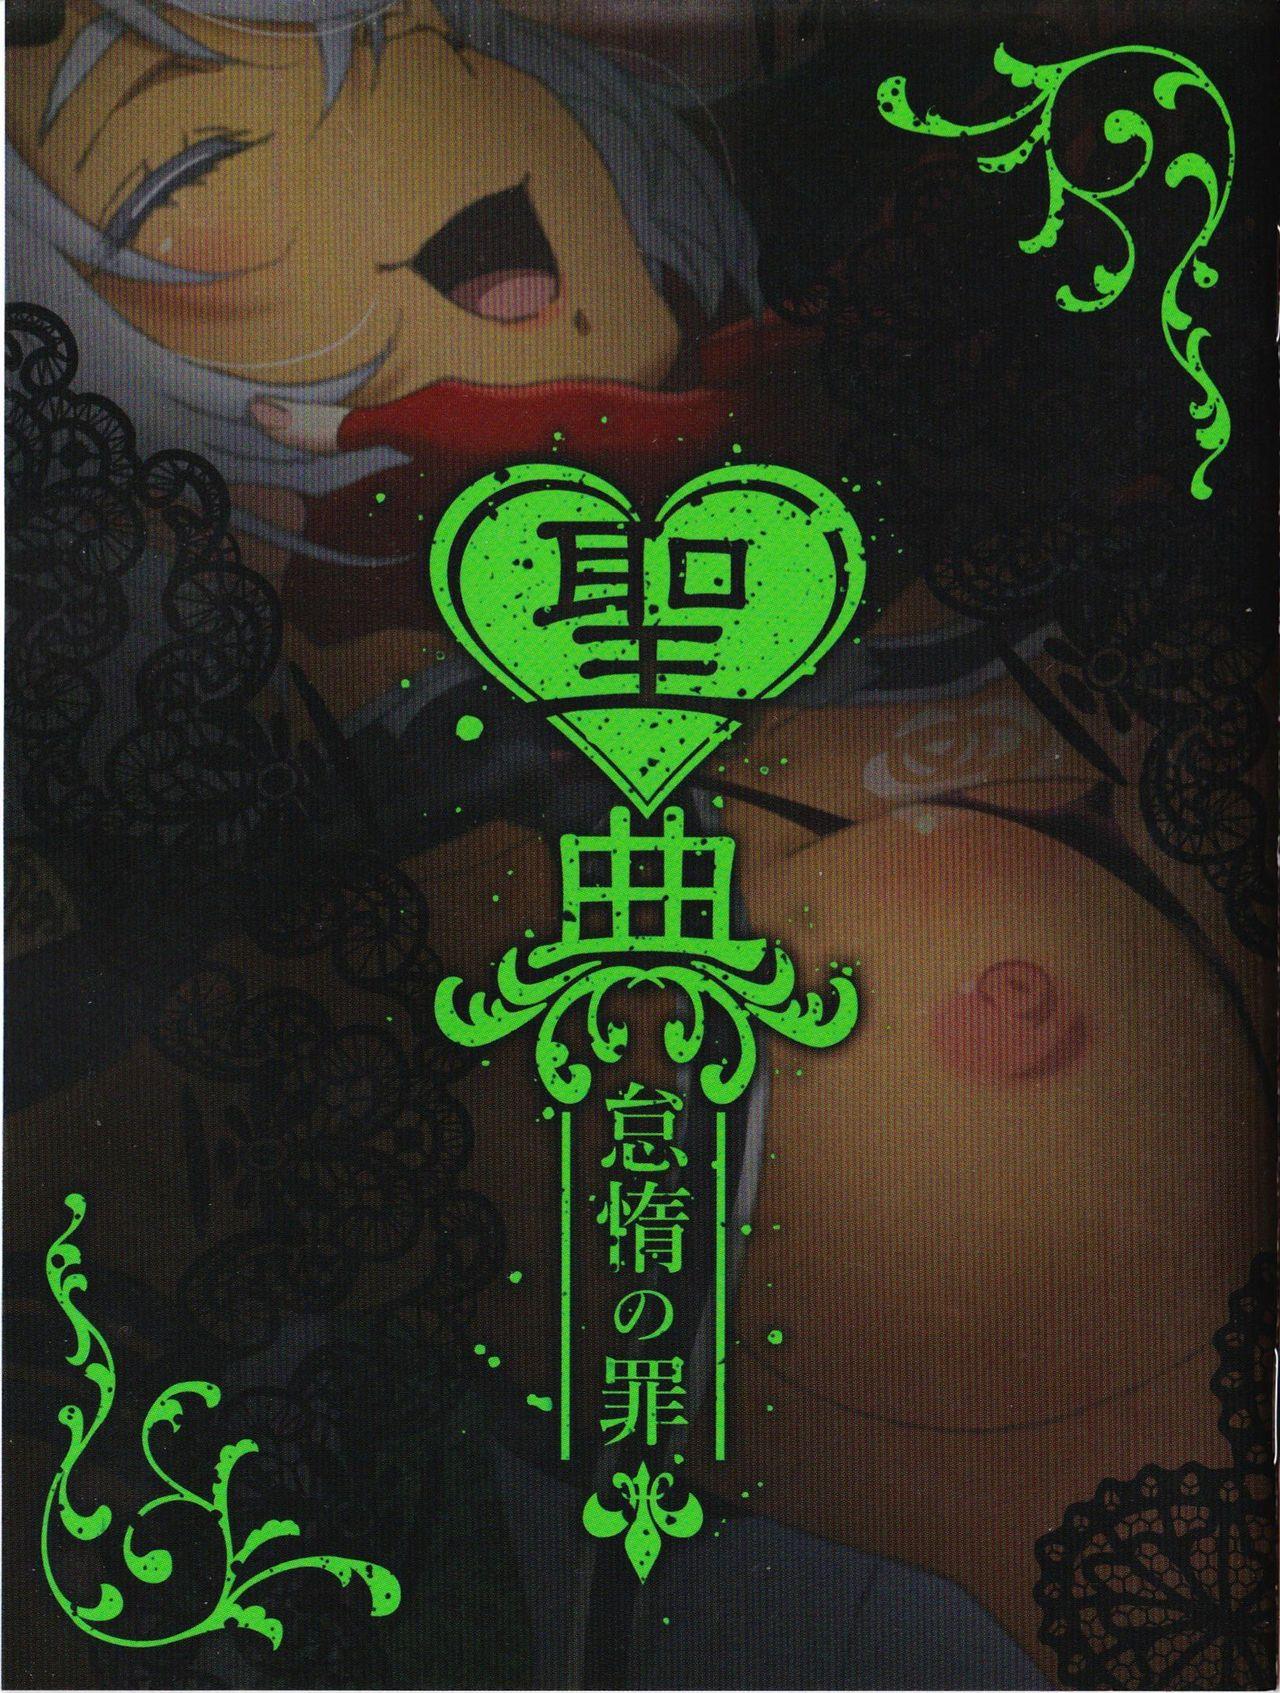 Gangbang Sin: Nanatsu No Taizai Vol.4 Limited Edition booklet - Seven mortal sins Butt Plug - Picture 1